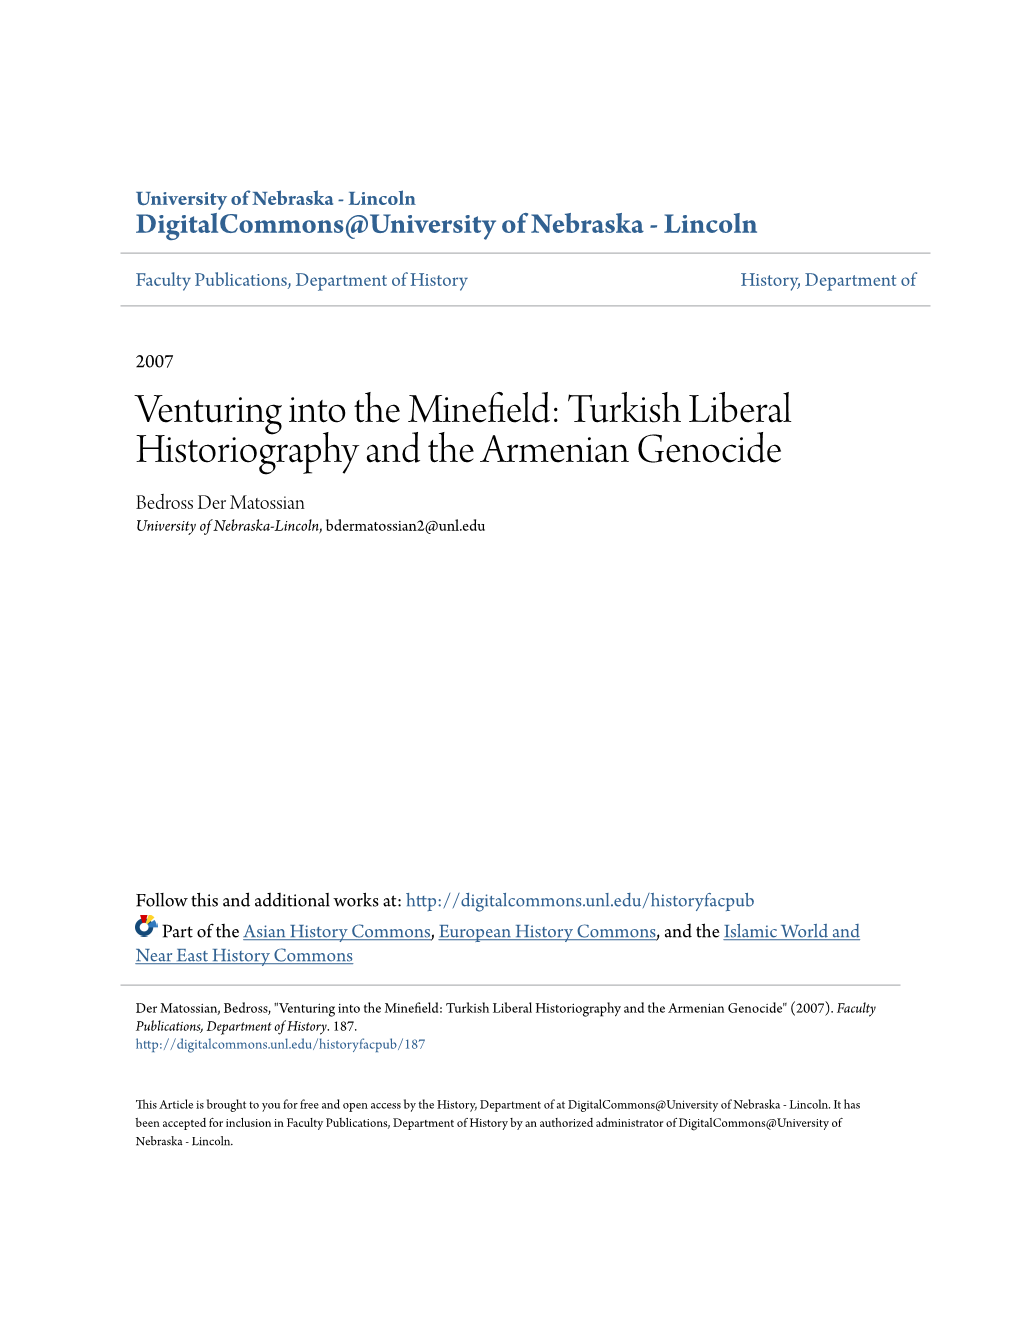 Turkish Liberal Historiography and the Armenian Genocide Bedross Der Matossian University of Nebraska-Lincoln, Bdermatossian2@Unl.Edu